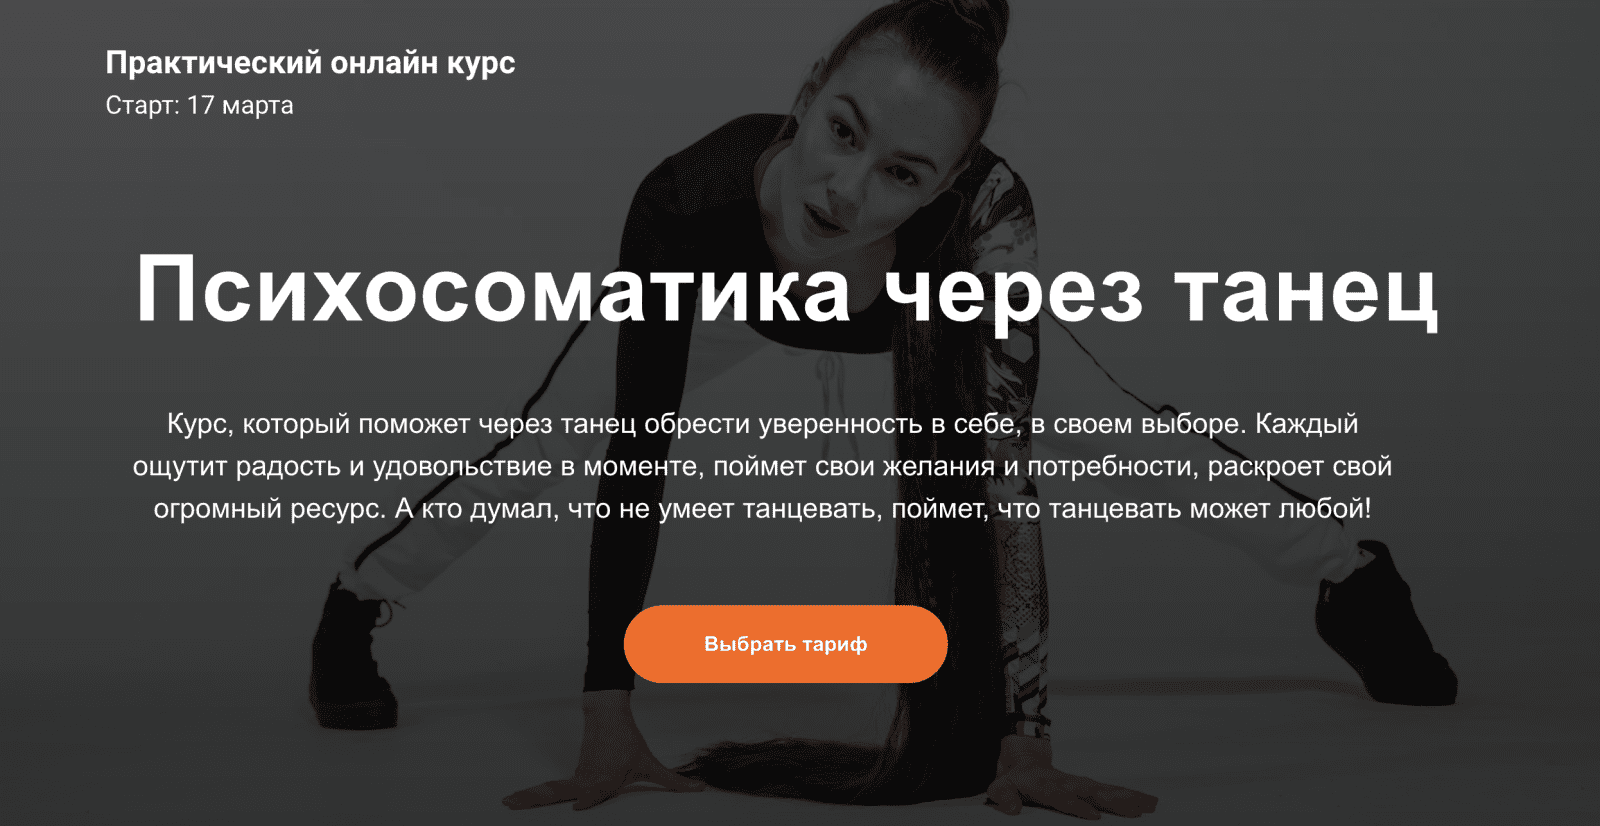 Изображение [teleska.psy] Практический онлайн курс "Психосоматика через танец" (2022) в посте 258866